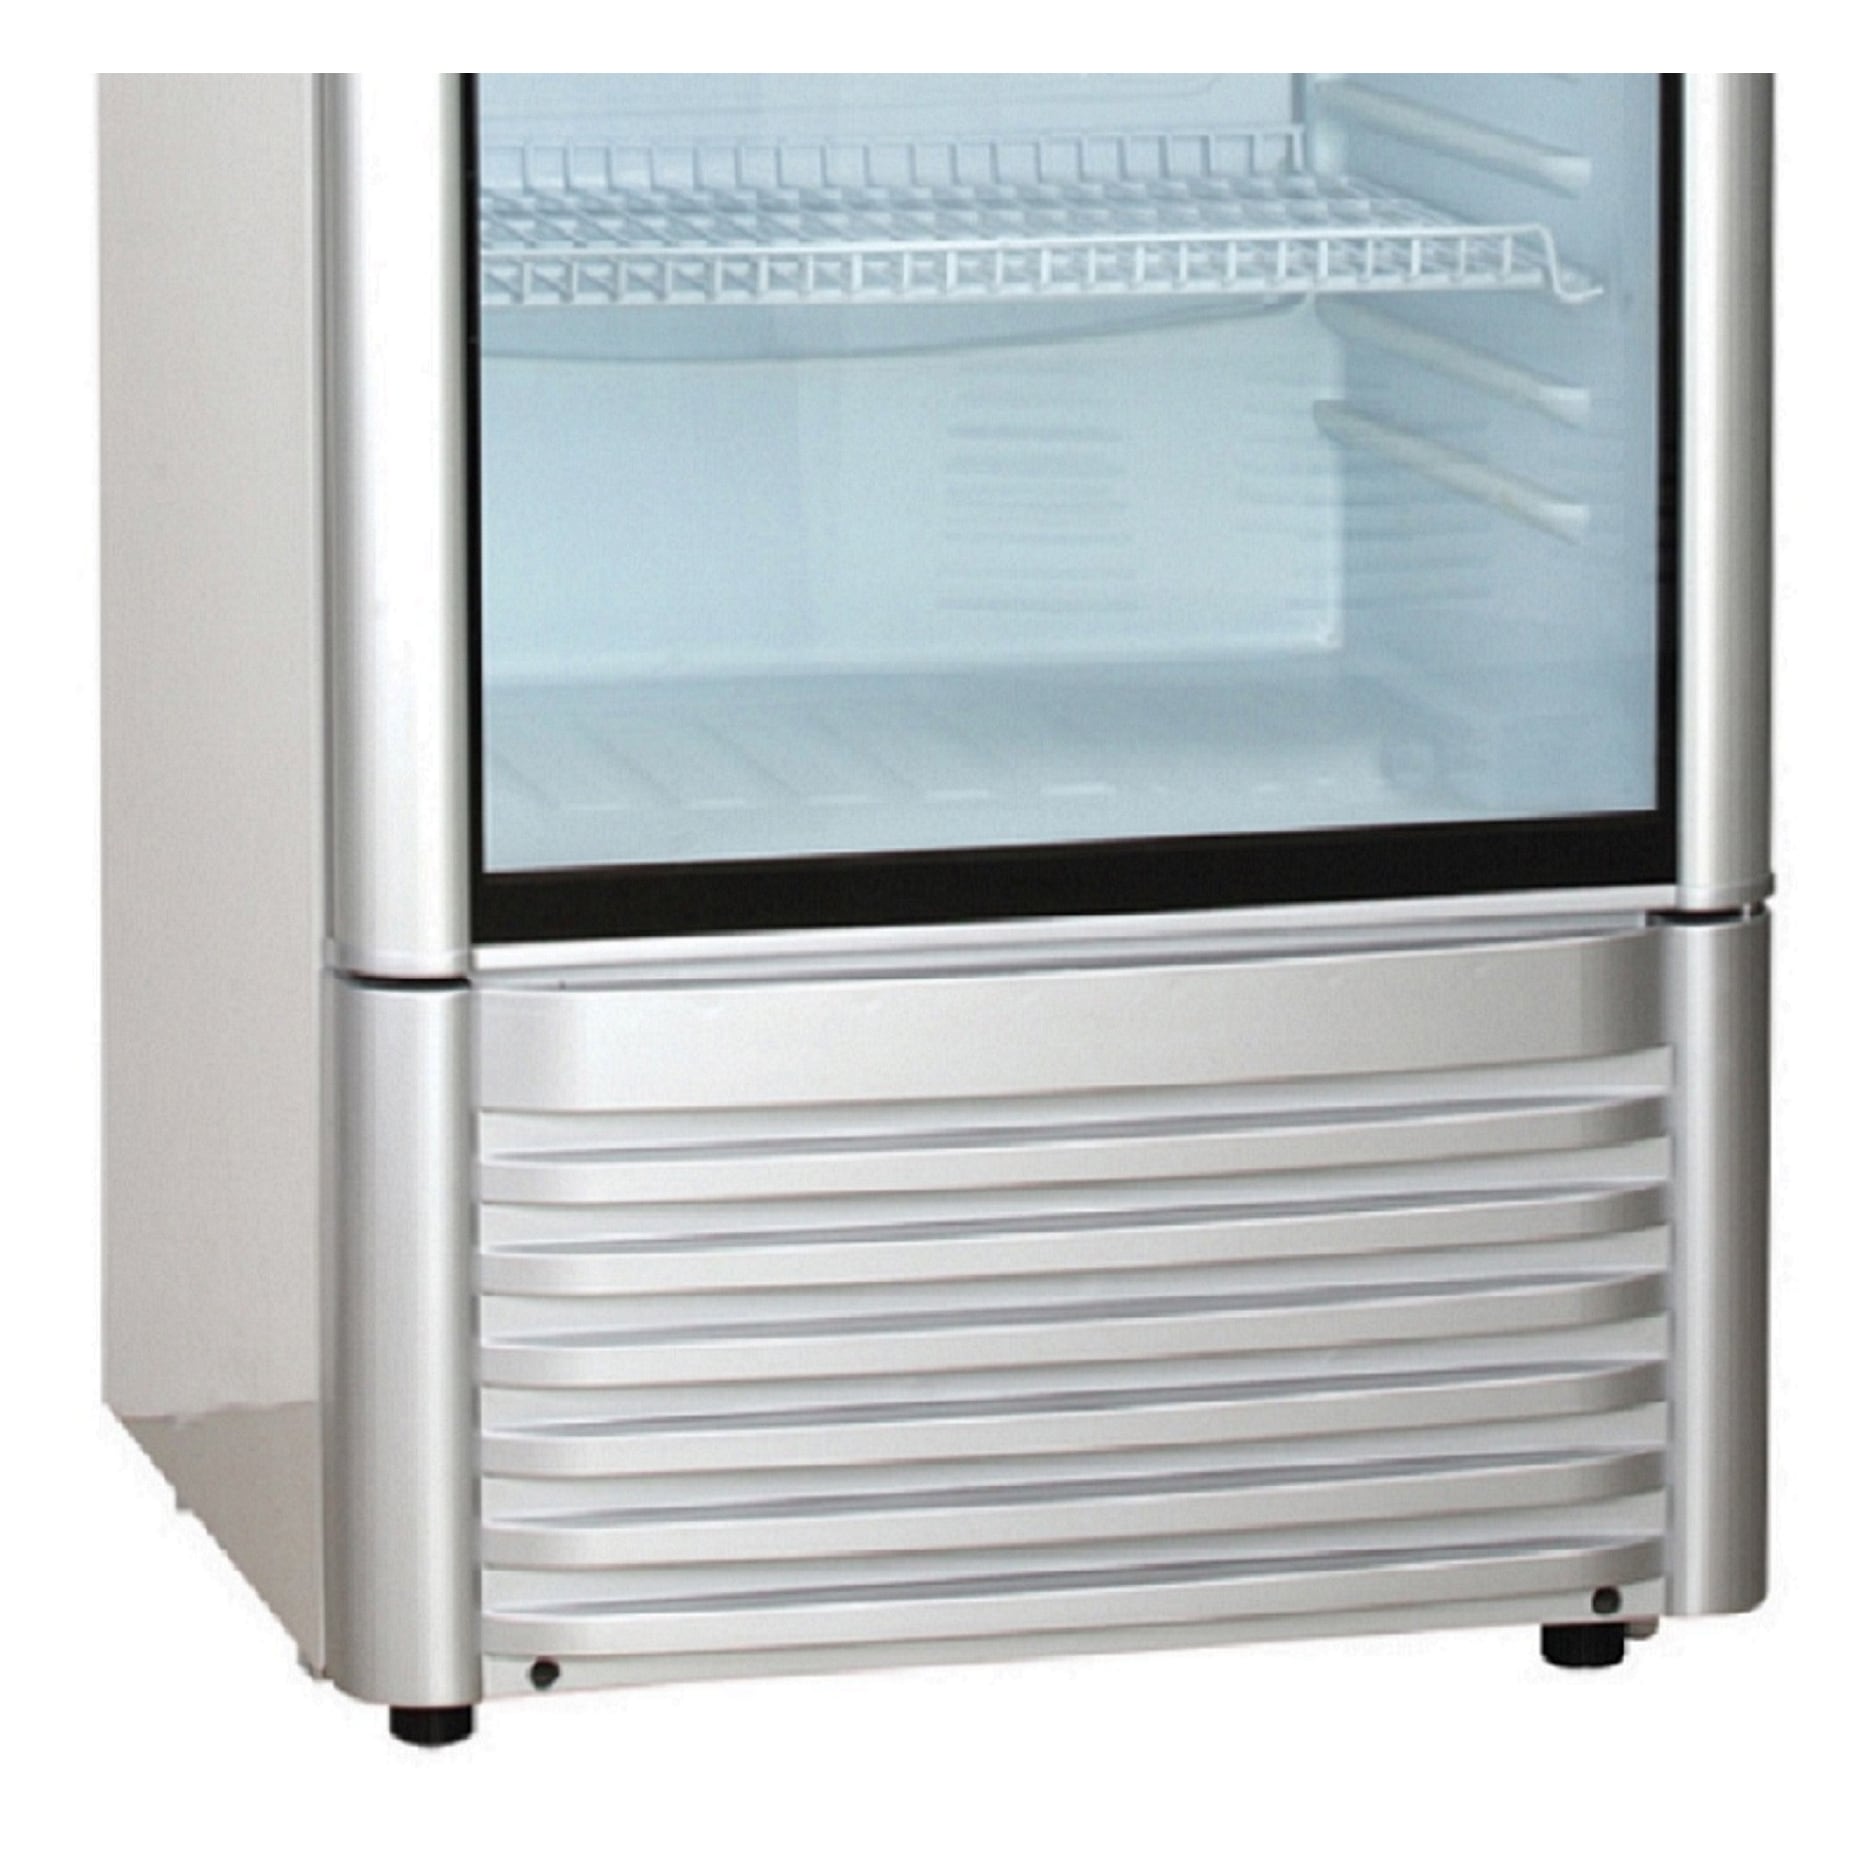 https://ak1.ostkcdn.com/images/products/is/images/direct/0e5998a9f6d55ab886b919505e140efc6b09f273/Premium-Levella-12.5-cu-ft-Single-Door-Commercial-Refrigerator-Beverage-Cooler.jpg